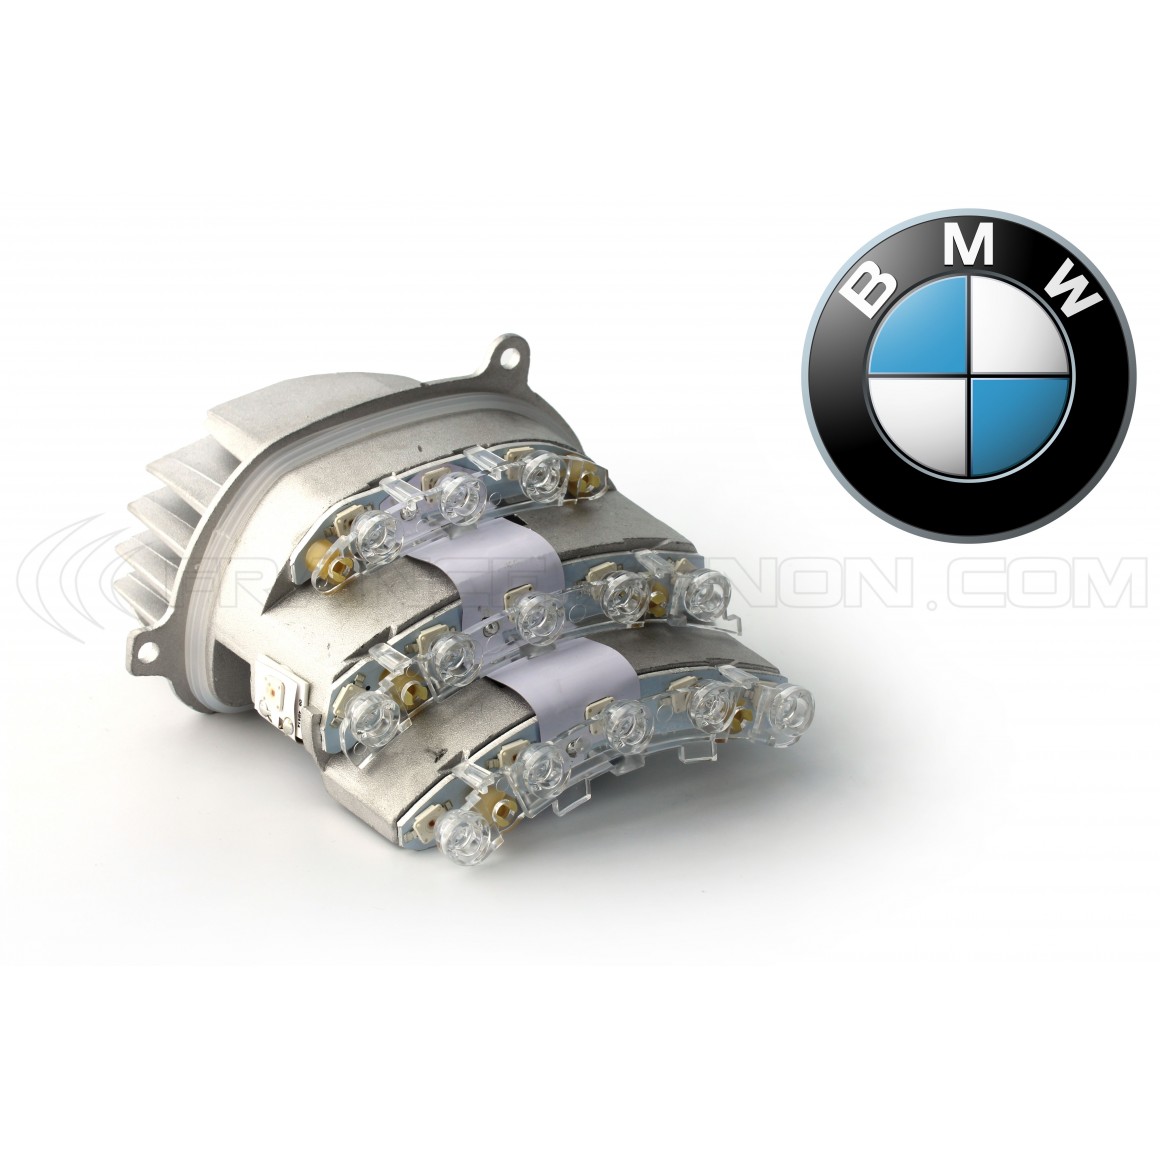 Module flashing led left 63127245813 BMW e90 + E91 - France-Xenon